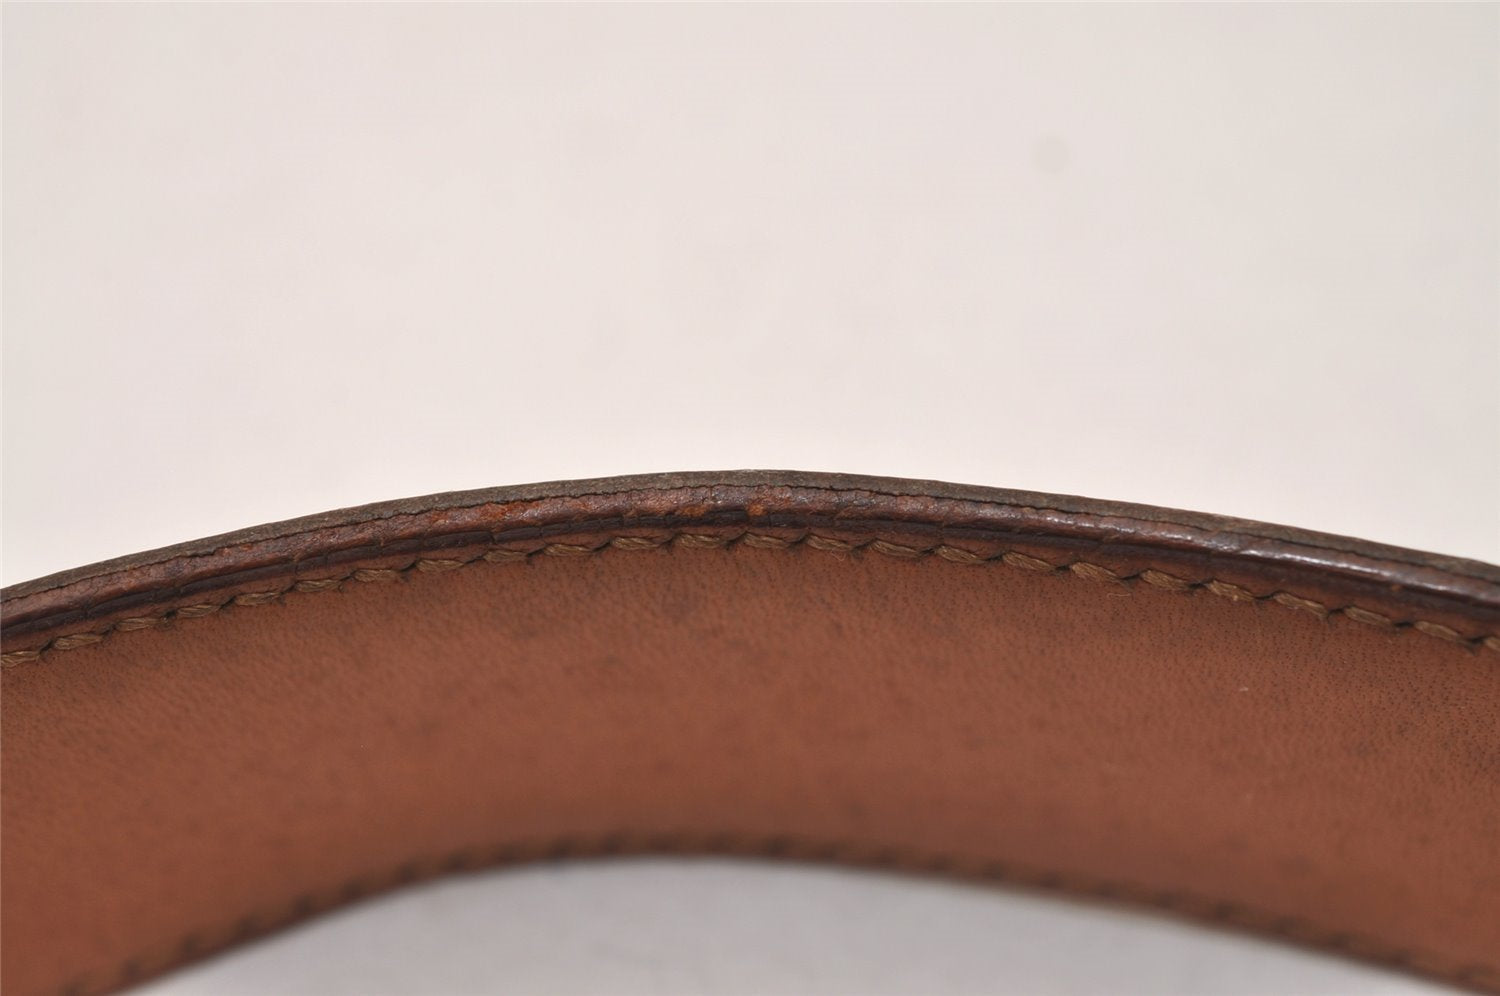 Authentic HERMES Leather Belt Reversible Size 65cm 25.6